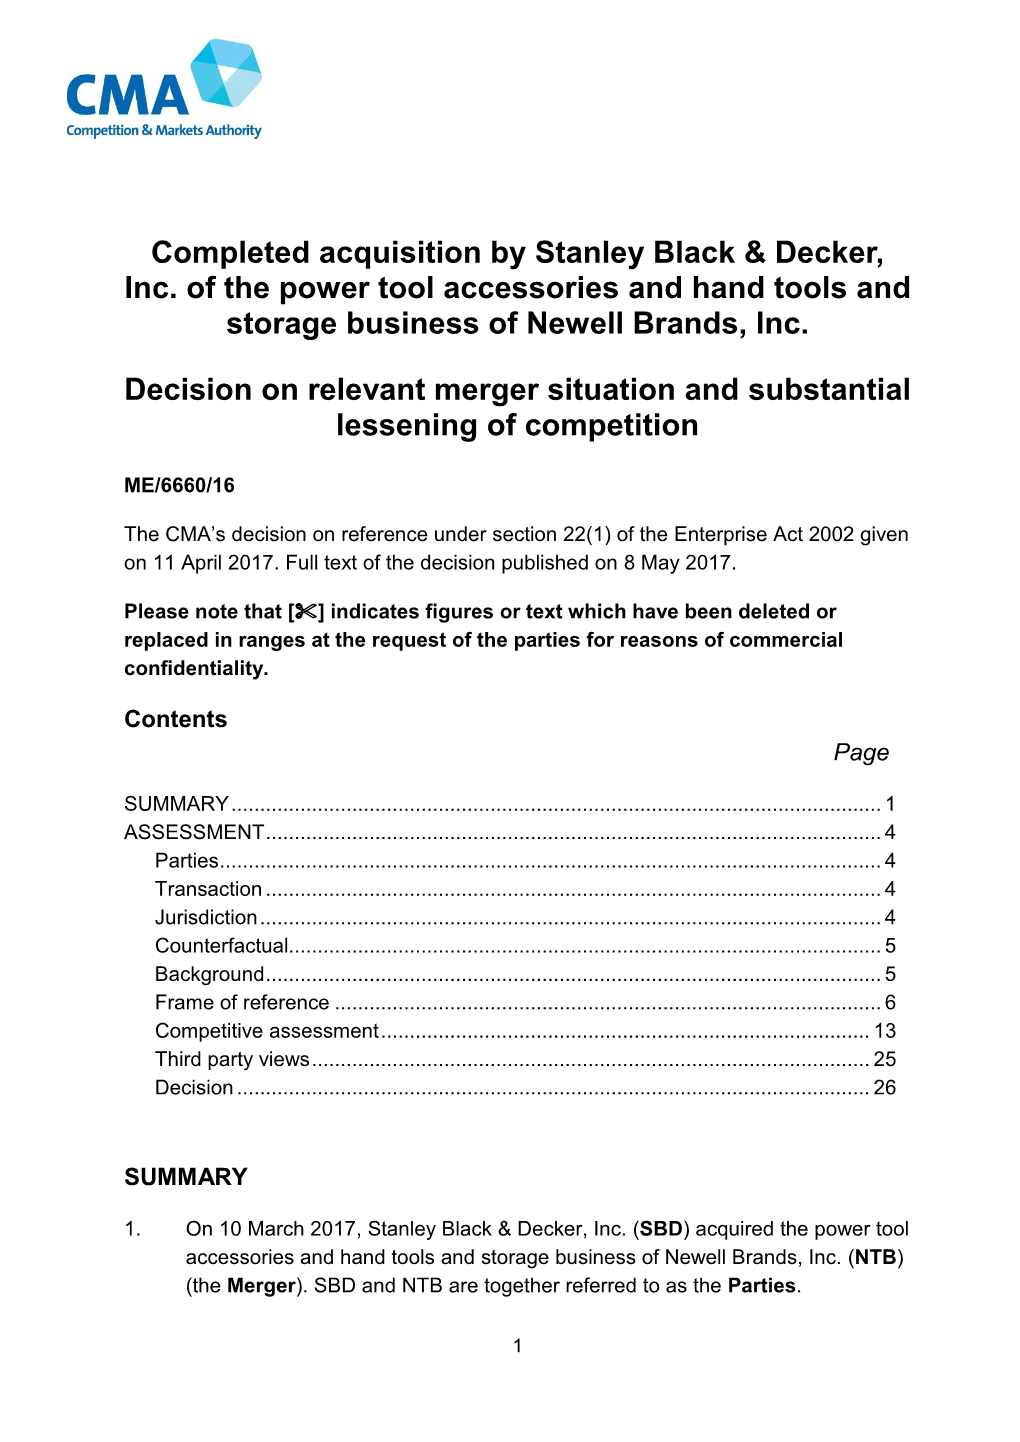 Stanley Black & Decker/Newell Decision on Relevant Merger